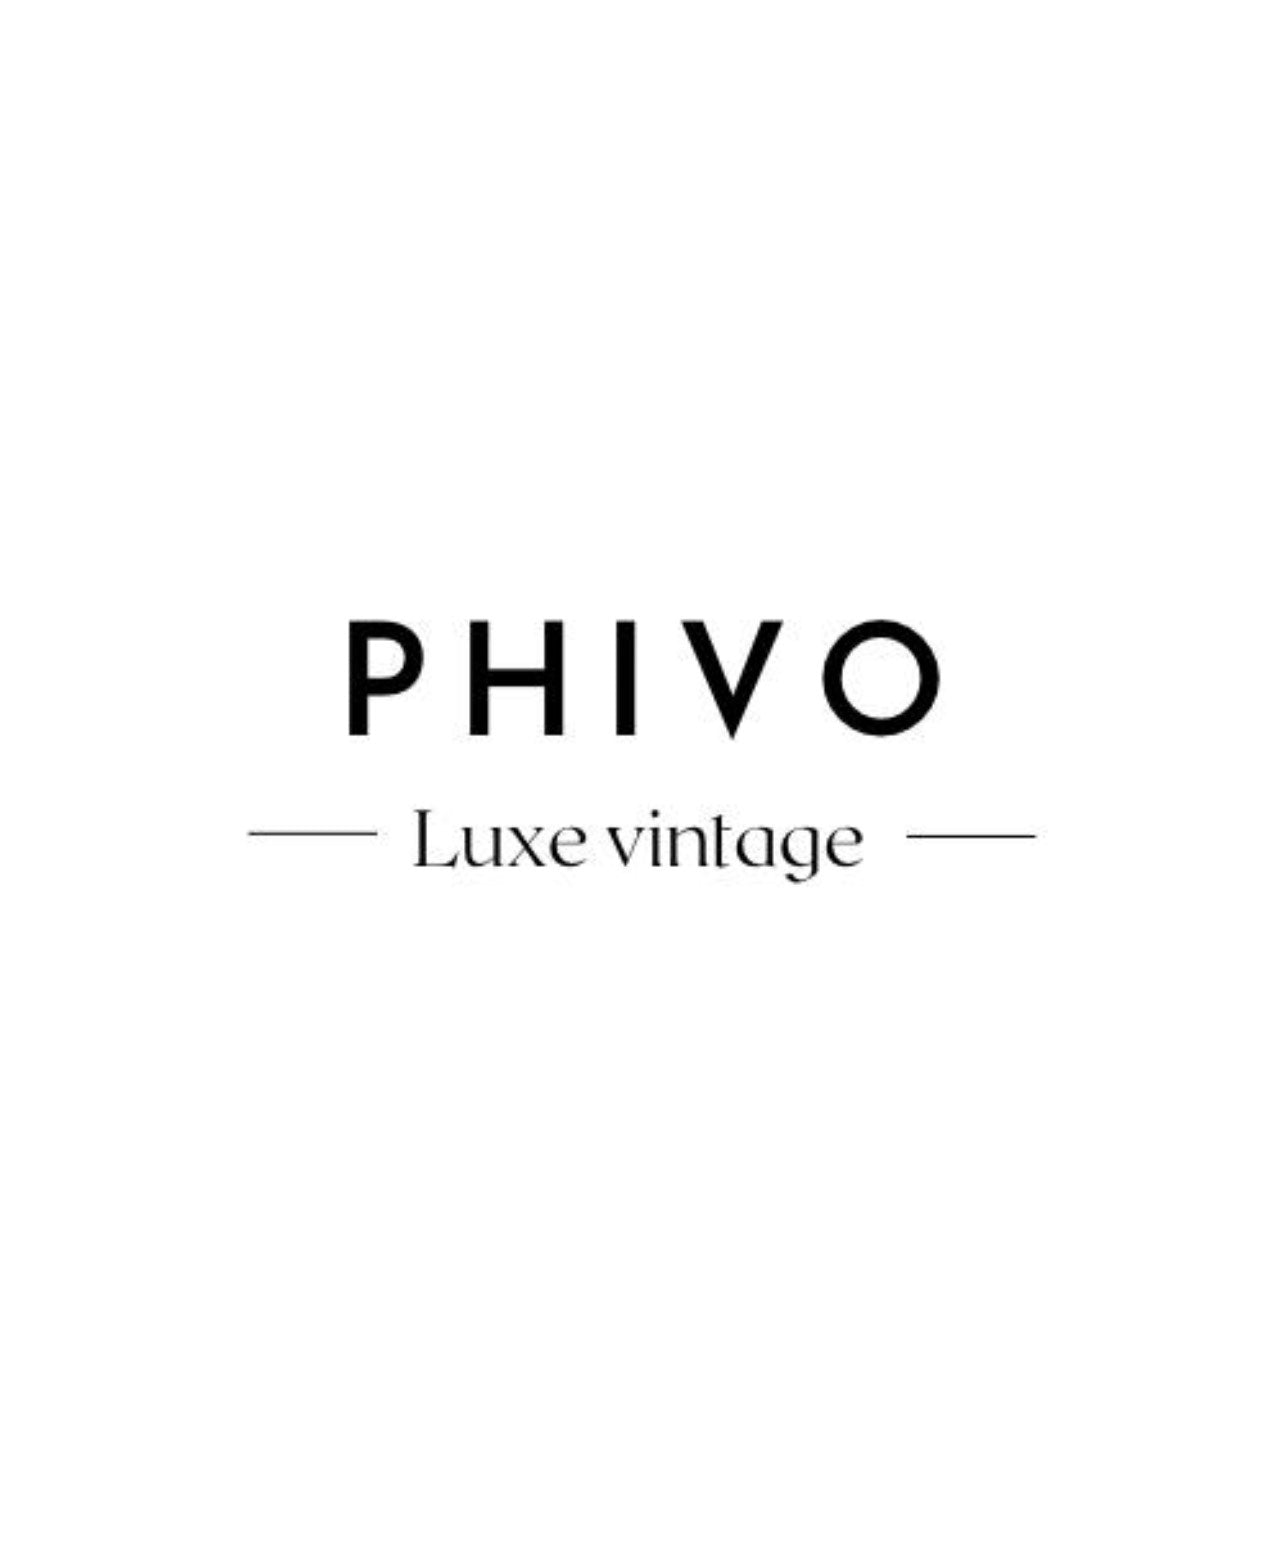 Louis Vuitton highbury damier ebene shoulder bag – Phivo-luxe-vintage